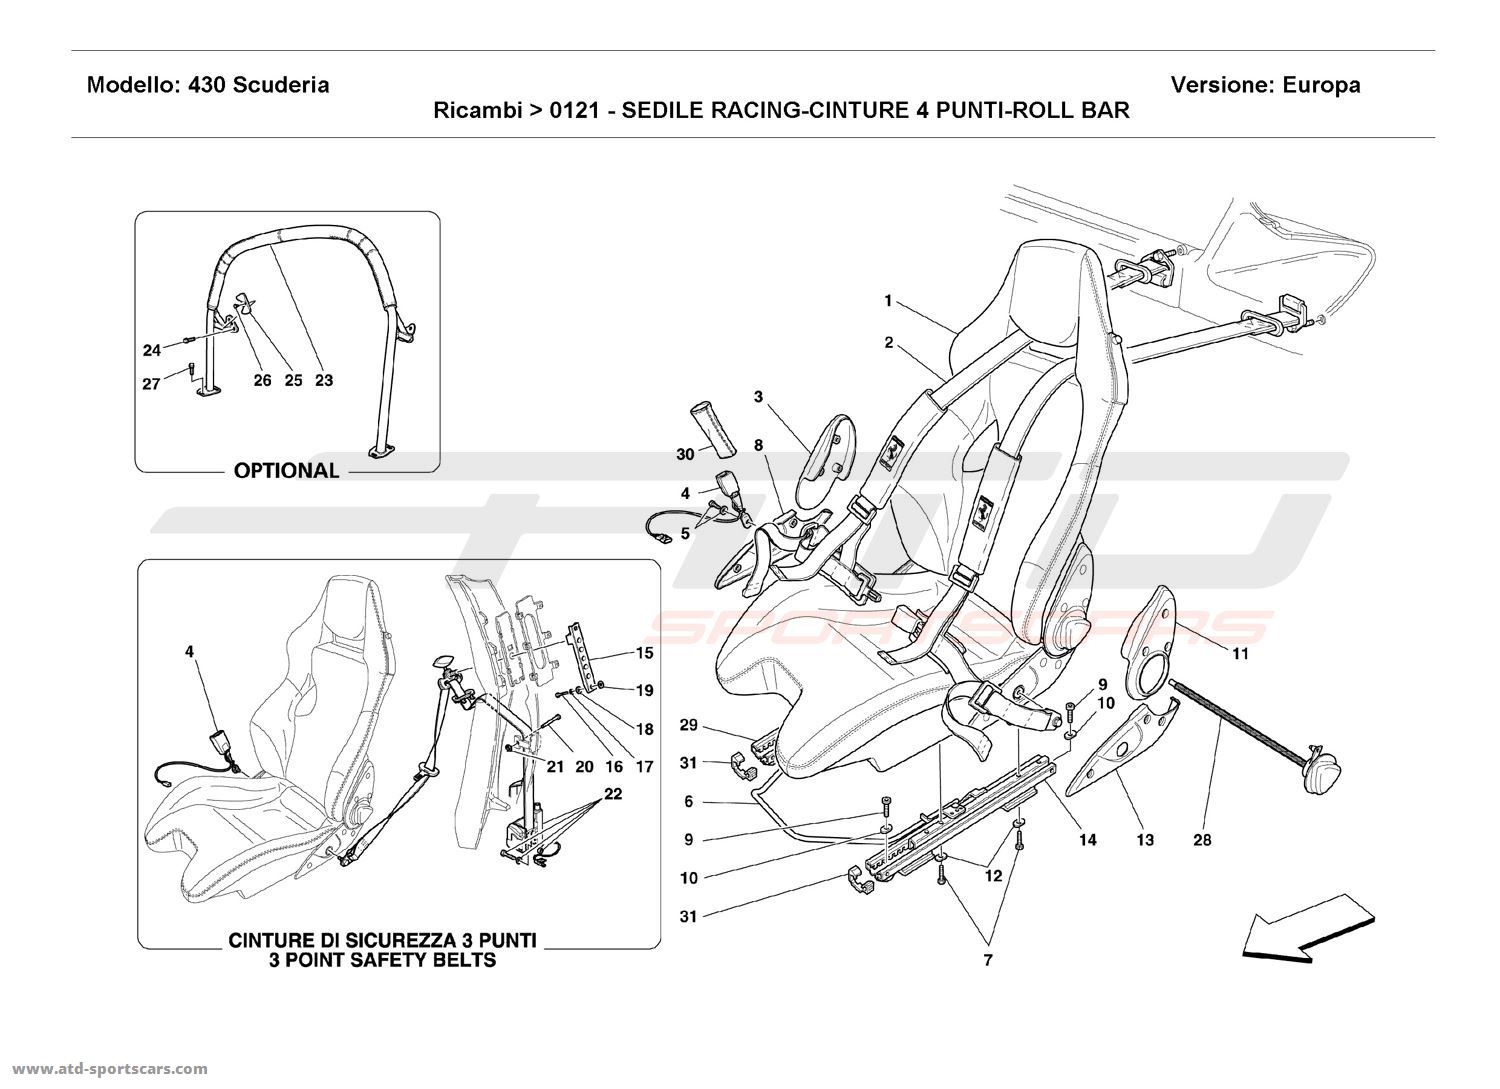 Ferrari F430 Scuderia RACING SEAT-4 POINT BELTS-ROLL BAR parts at ATD ...